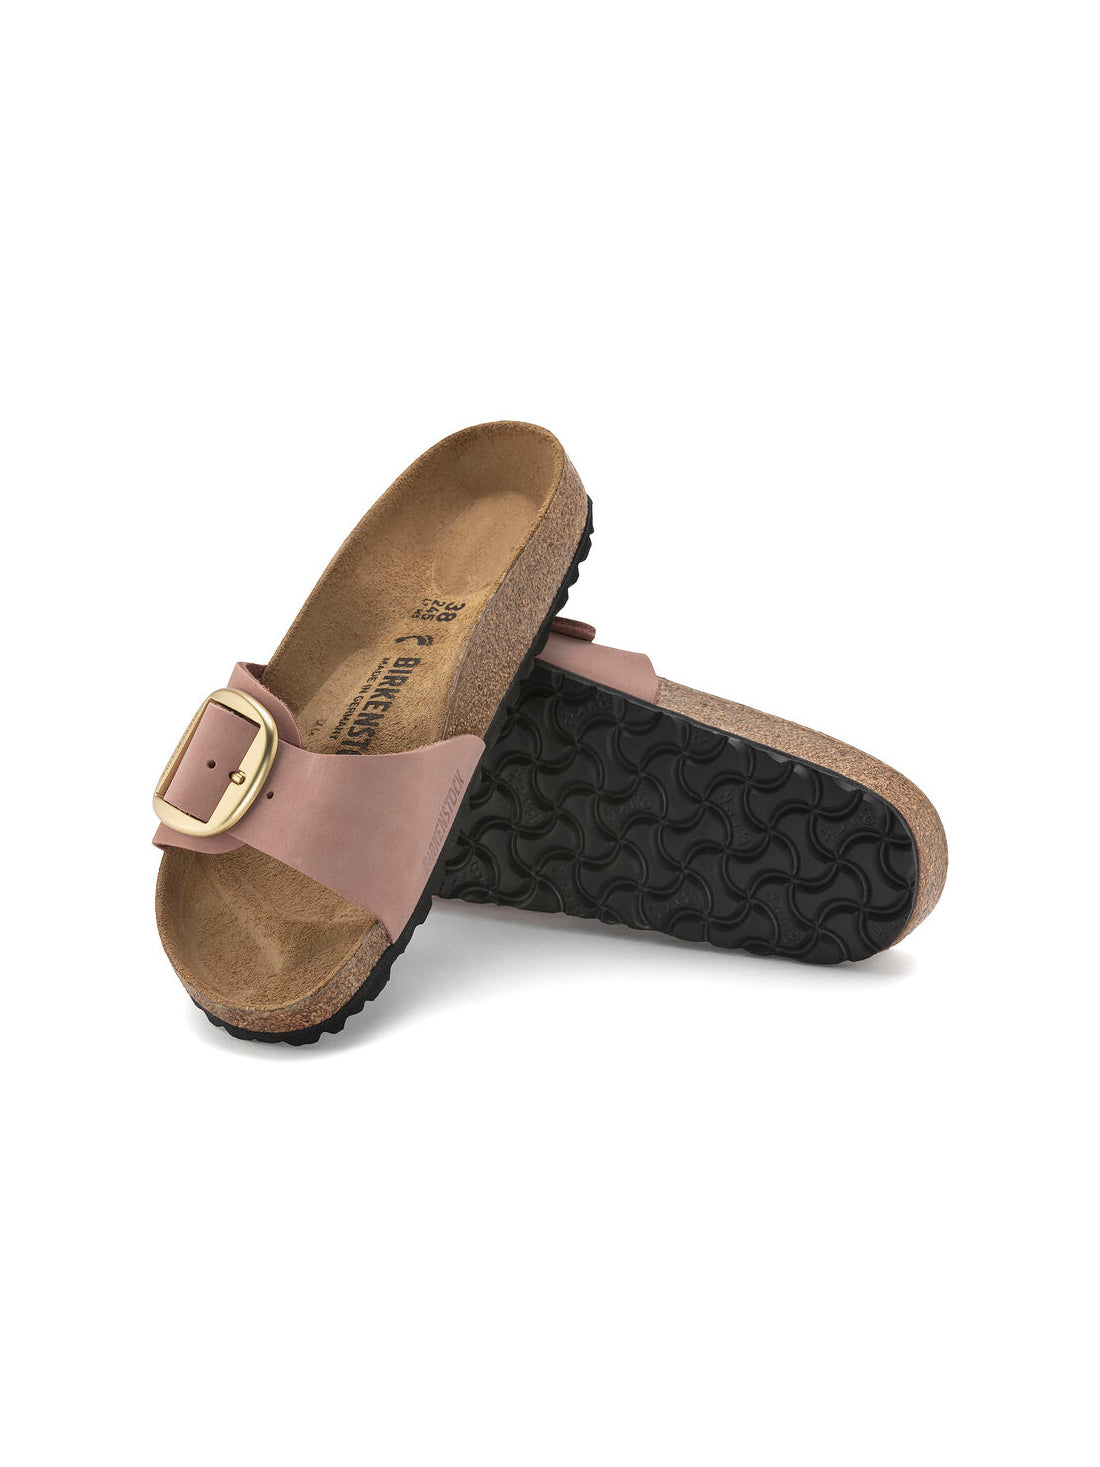 birkenstock madrid big buckle sandal in old rose nubuck leather narrow